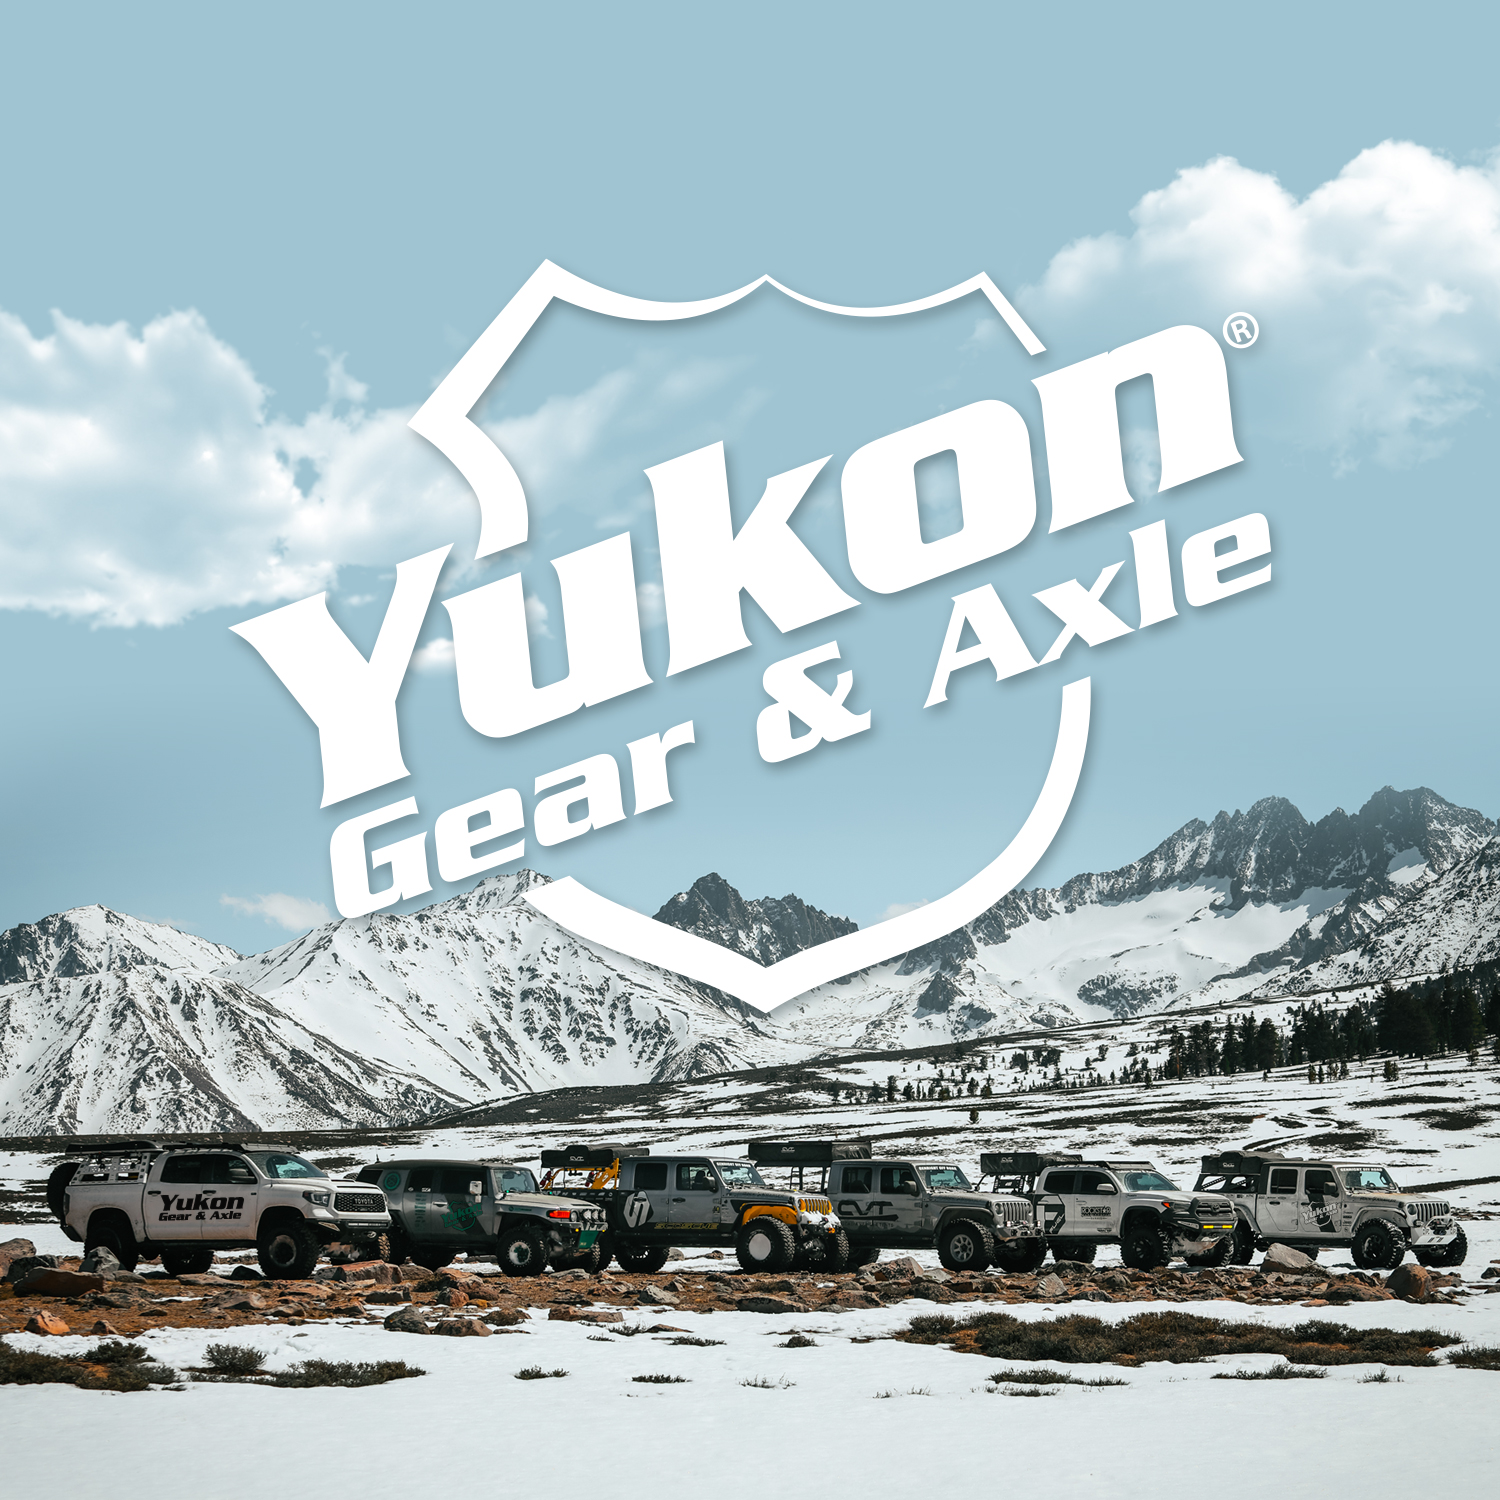 Yukon high performance replacement ring & pinion gear set, Dana 70, 4.56 thick 